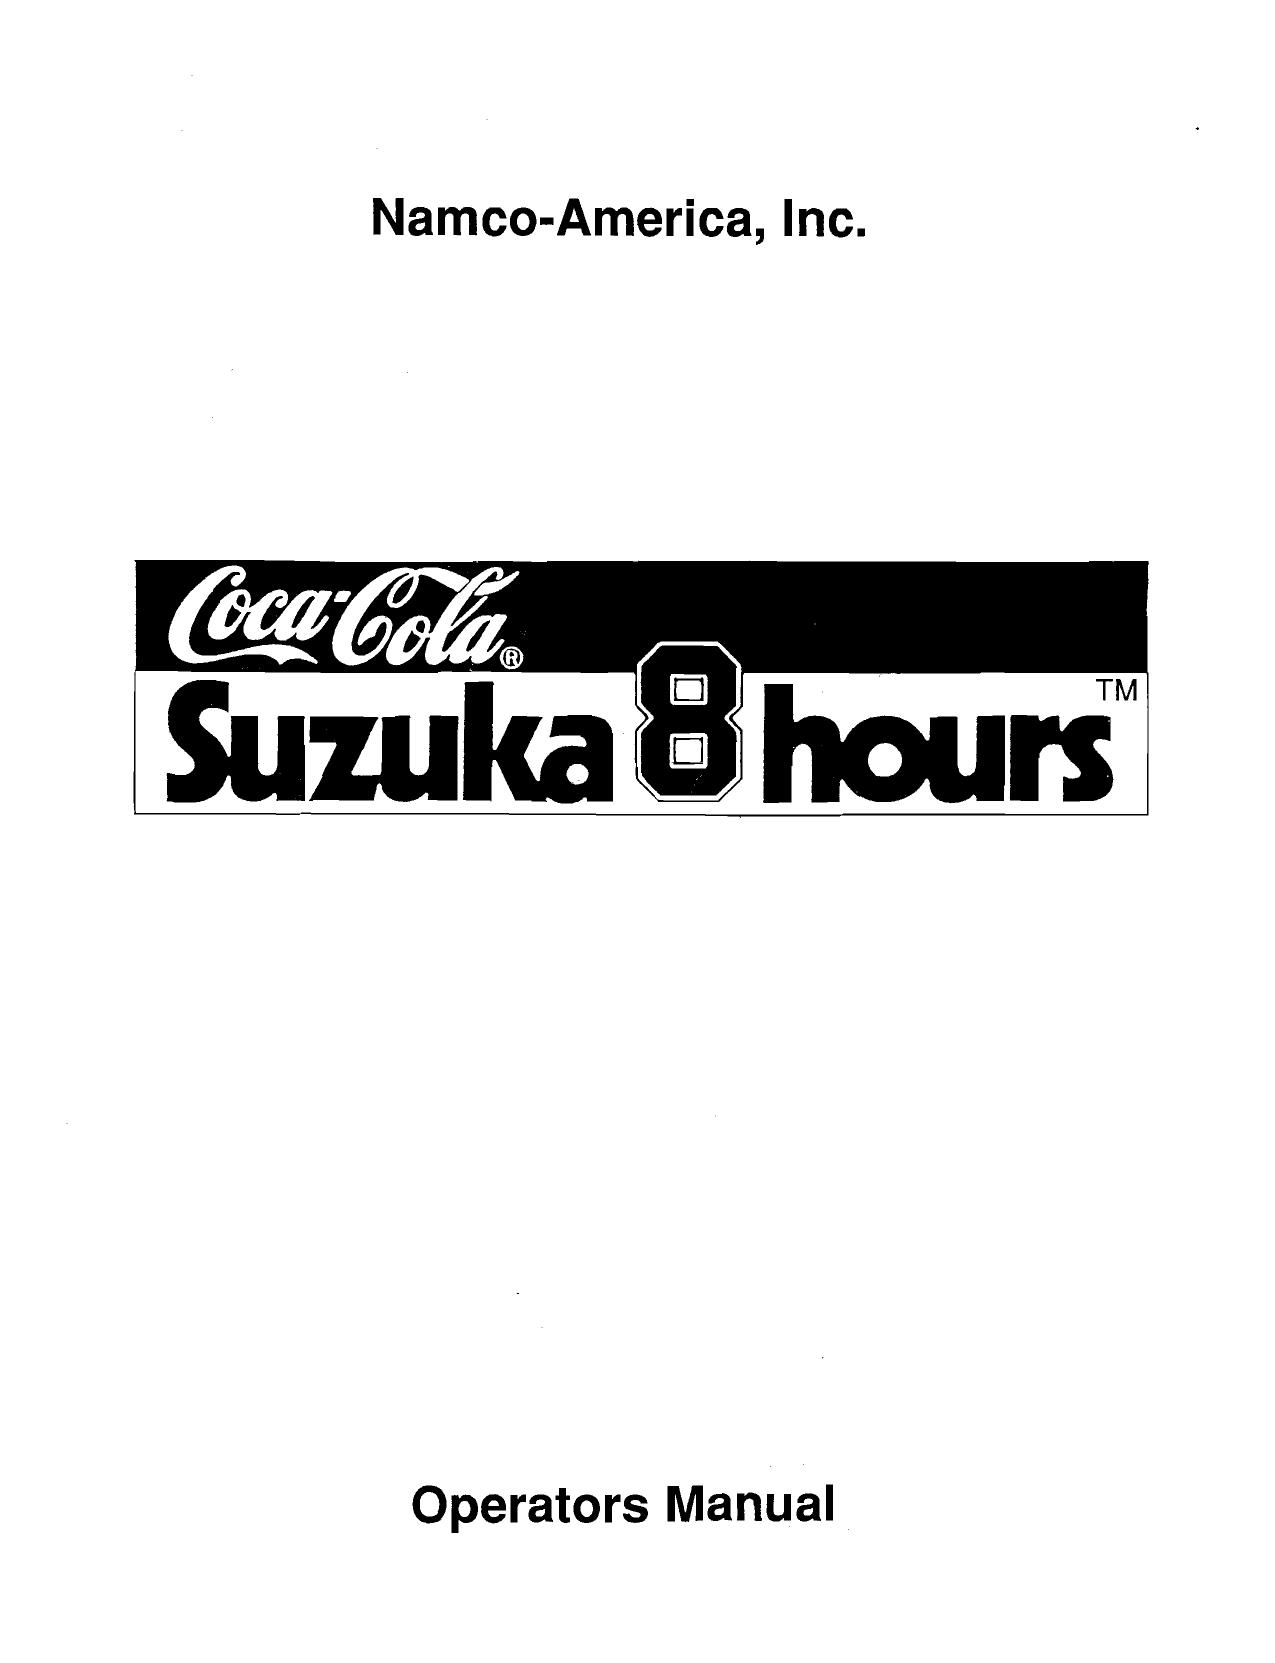 Suzuka 8 Hours Coca Cola Operators Manual